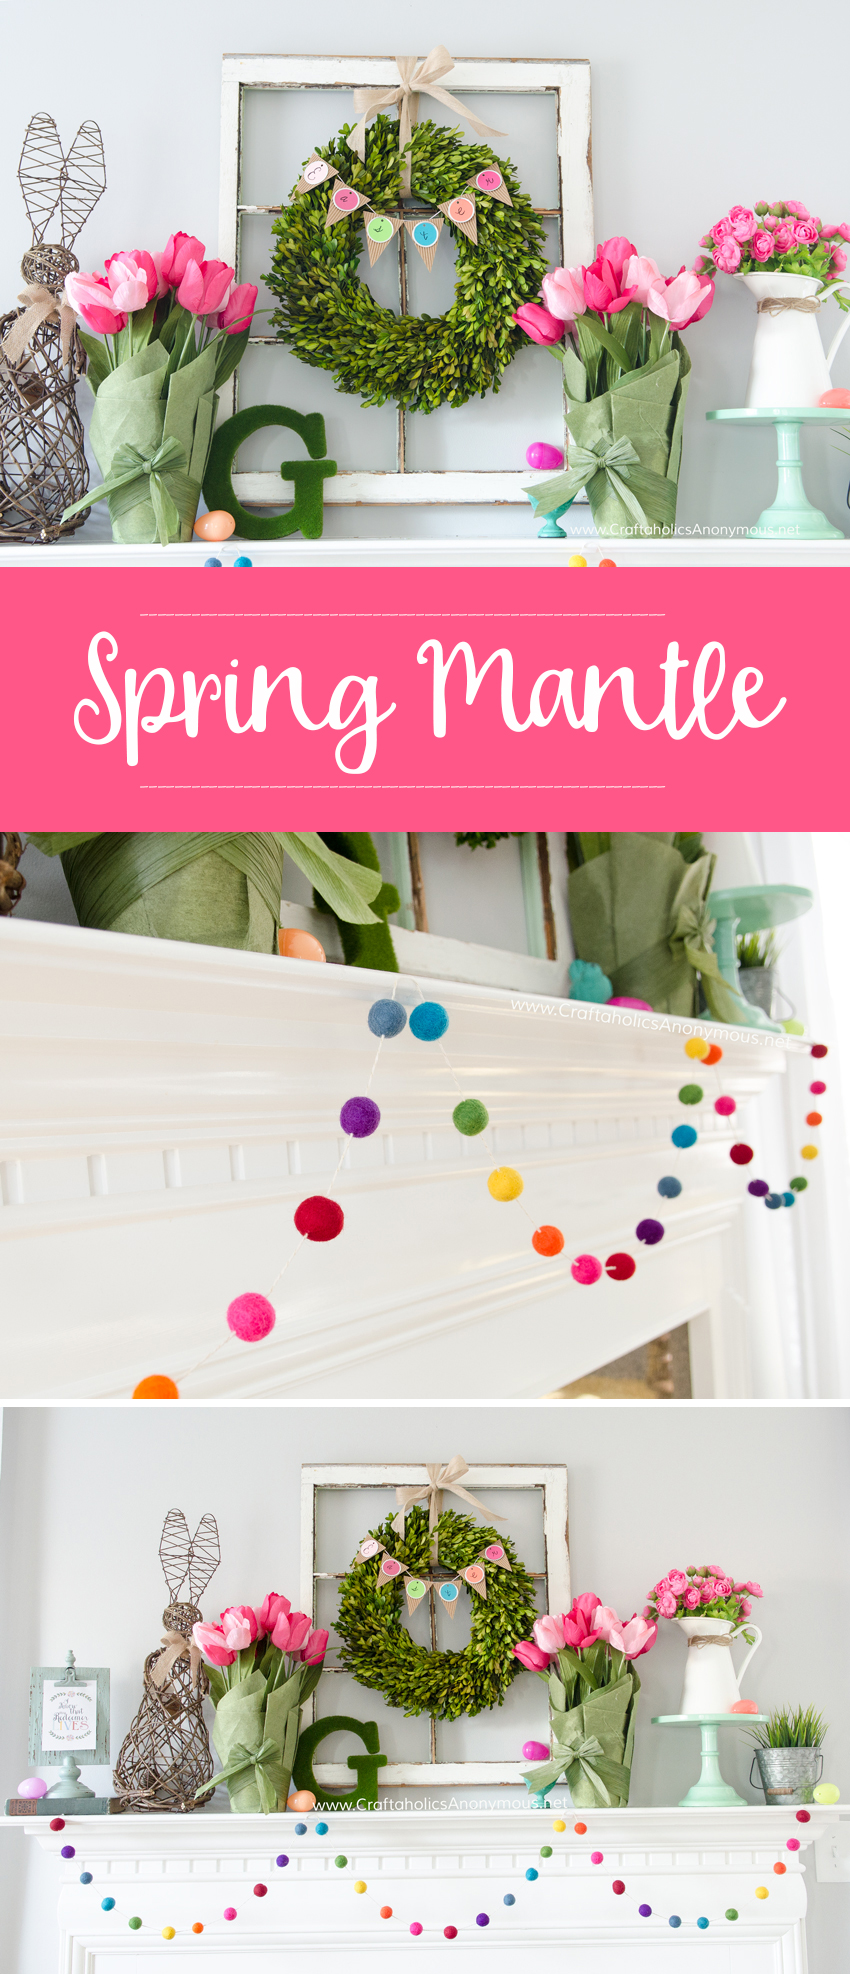 DIY Spring Mantle decor. Love that rainbow felt ball garland!